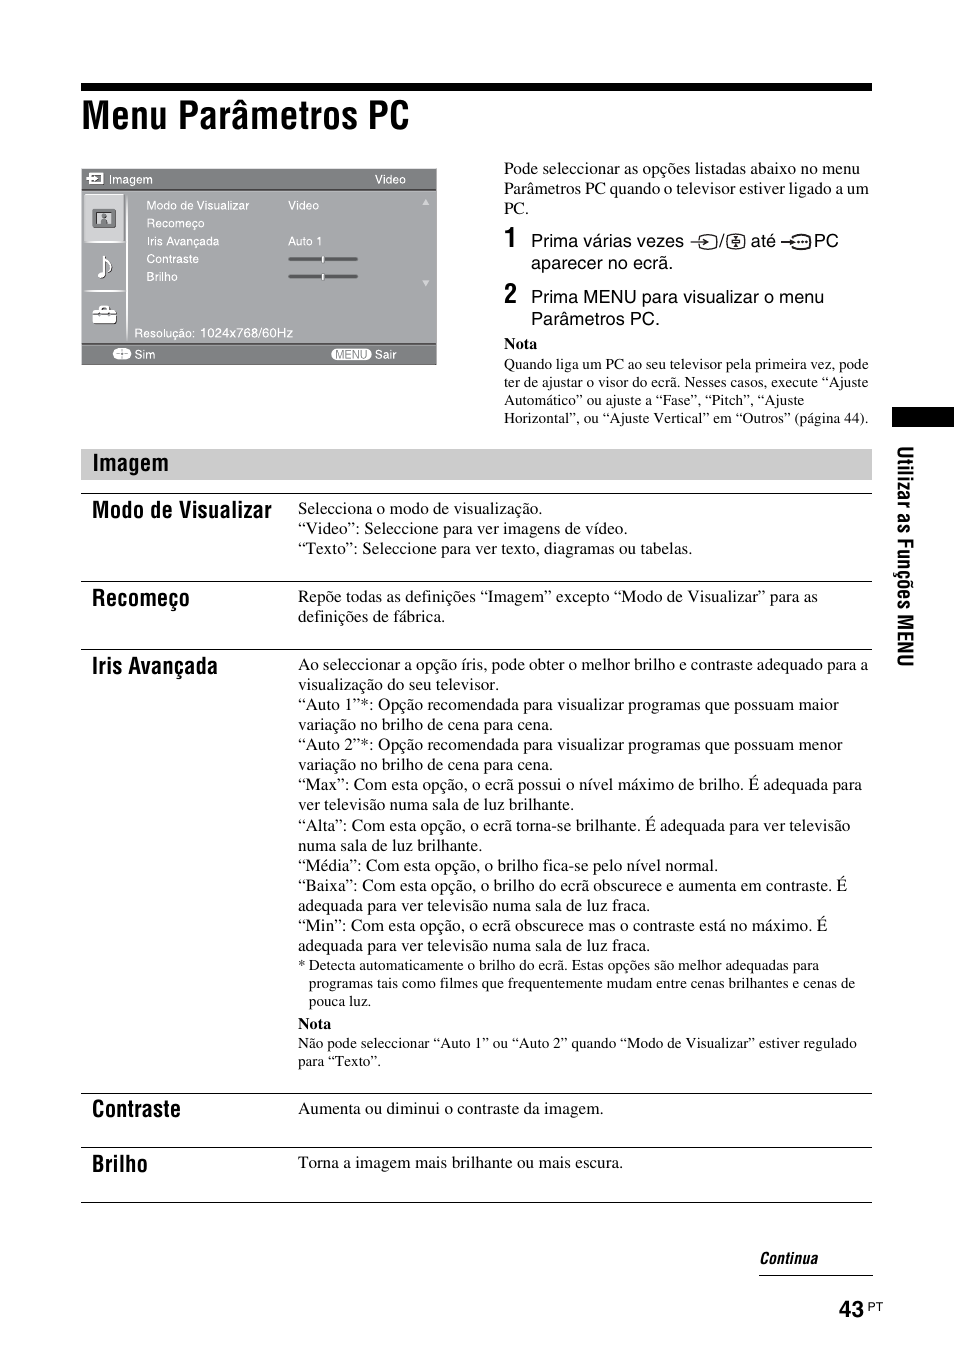 Menu parâmetros pc | Инструкция по эксплуатации Sony KDS-70R2000 | Страница 289 / 372